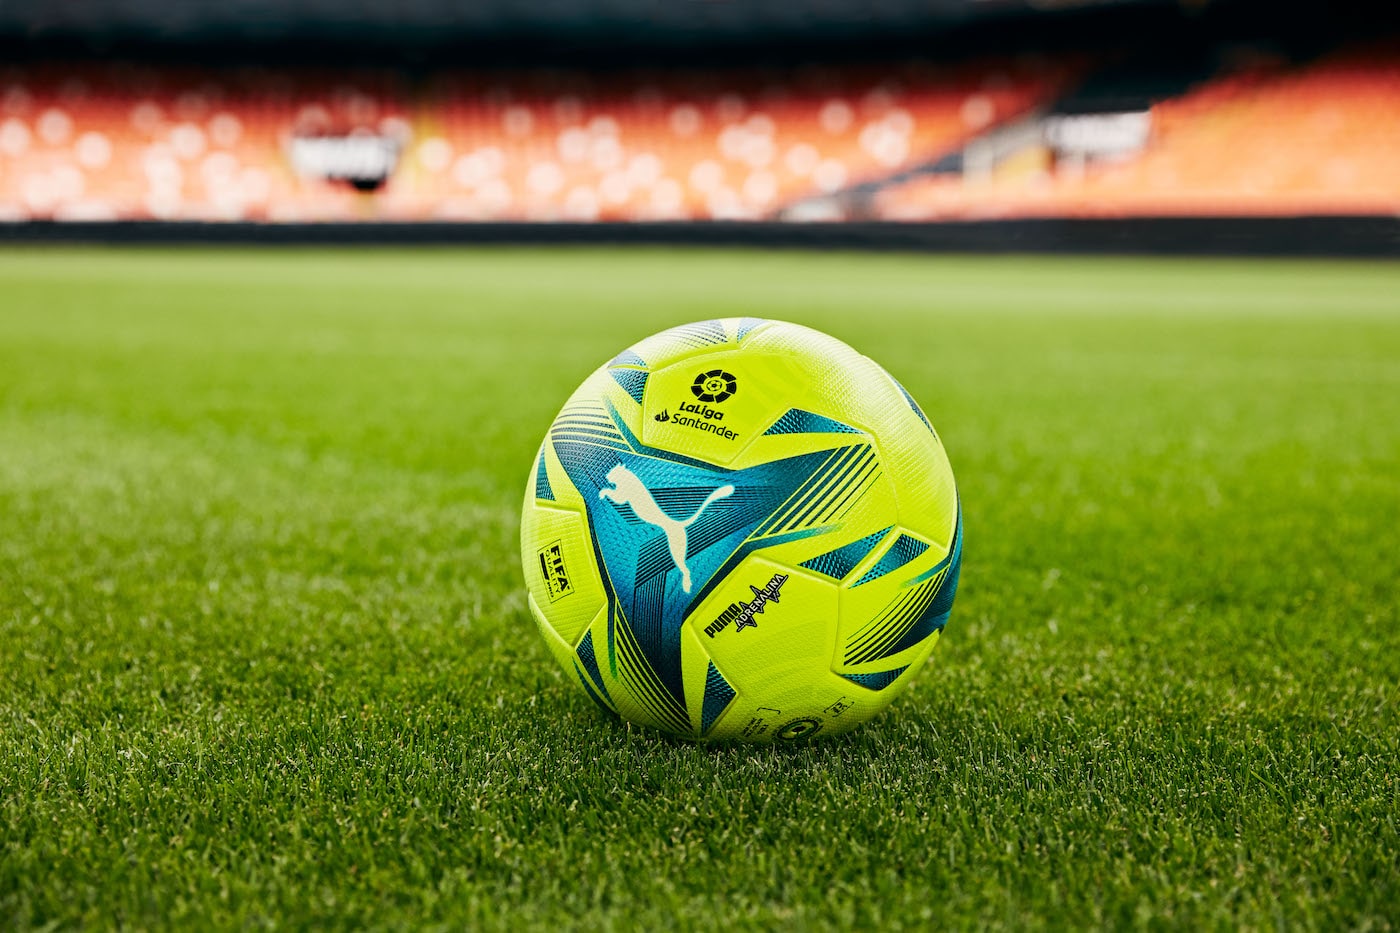 Adrenalina match ball for the 2021/22 laliga season